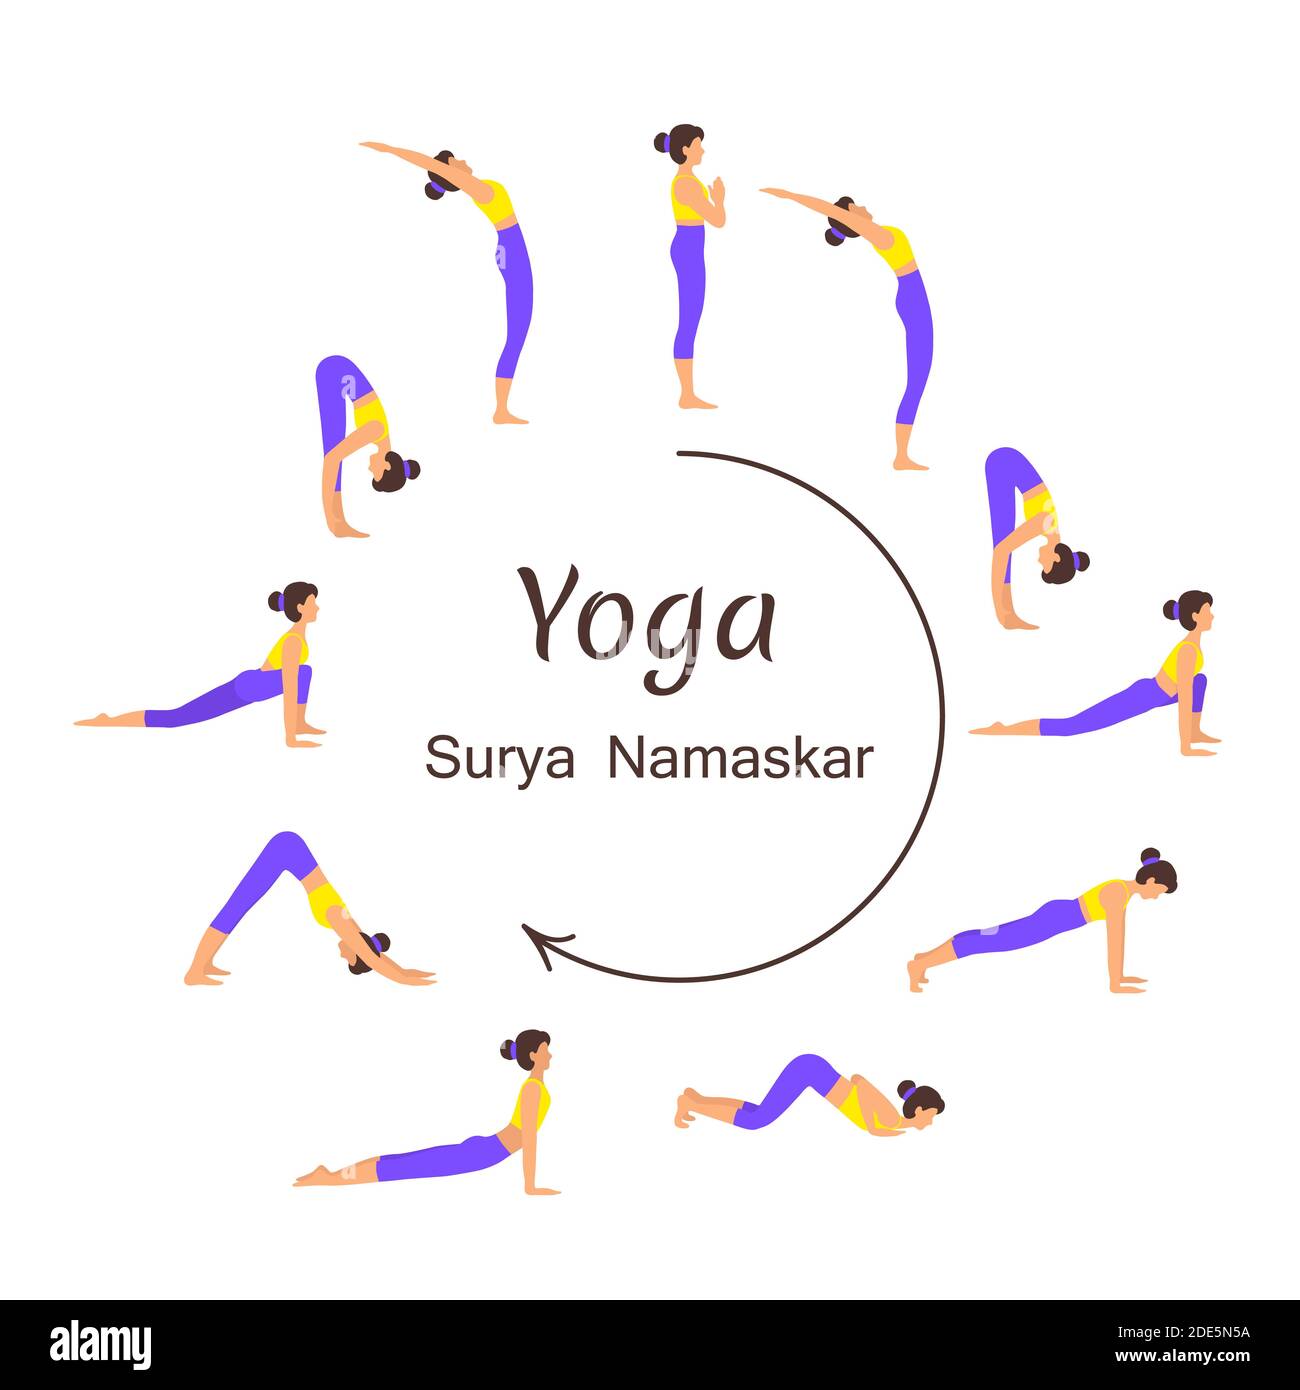 Surya Namaskar B. Notated with my yoga stick figures. | Asana